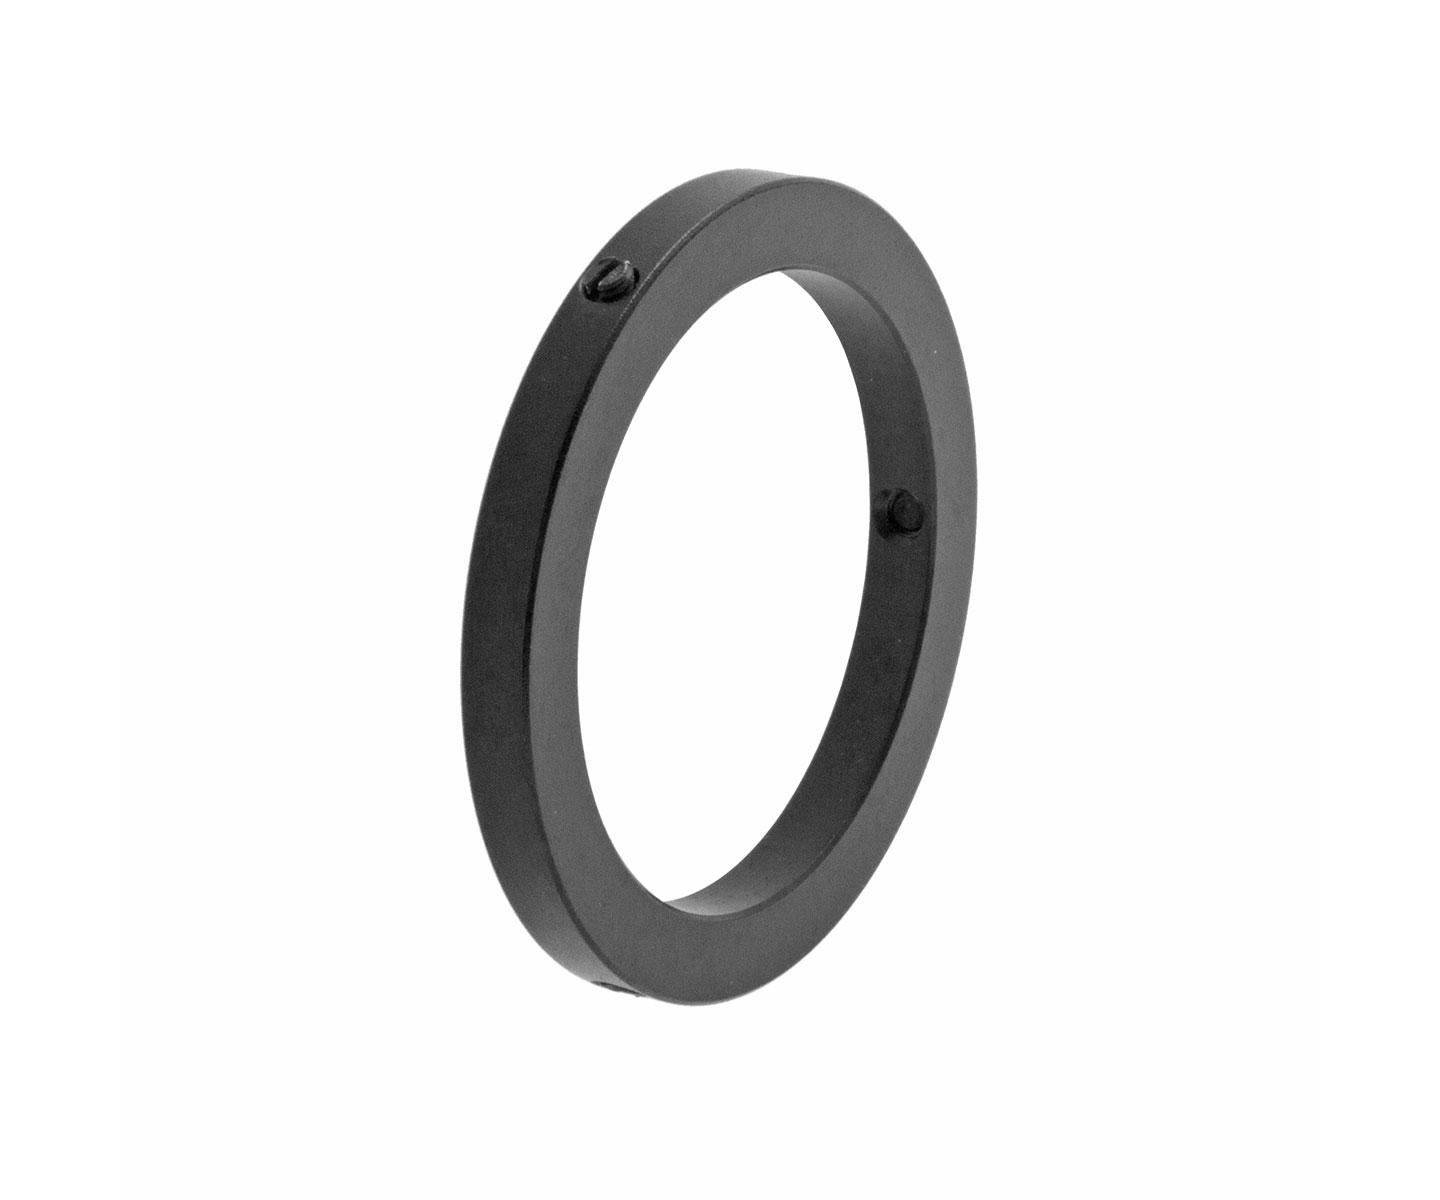   TS-Optics 1.25" parfocalizing ring / CCD locking ring - for 1.25" barrels [EN]  